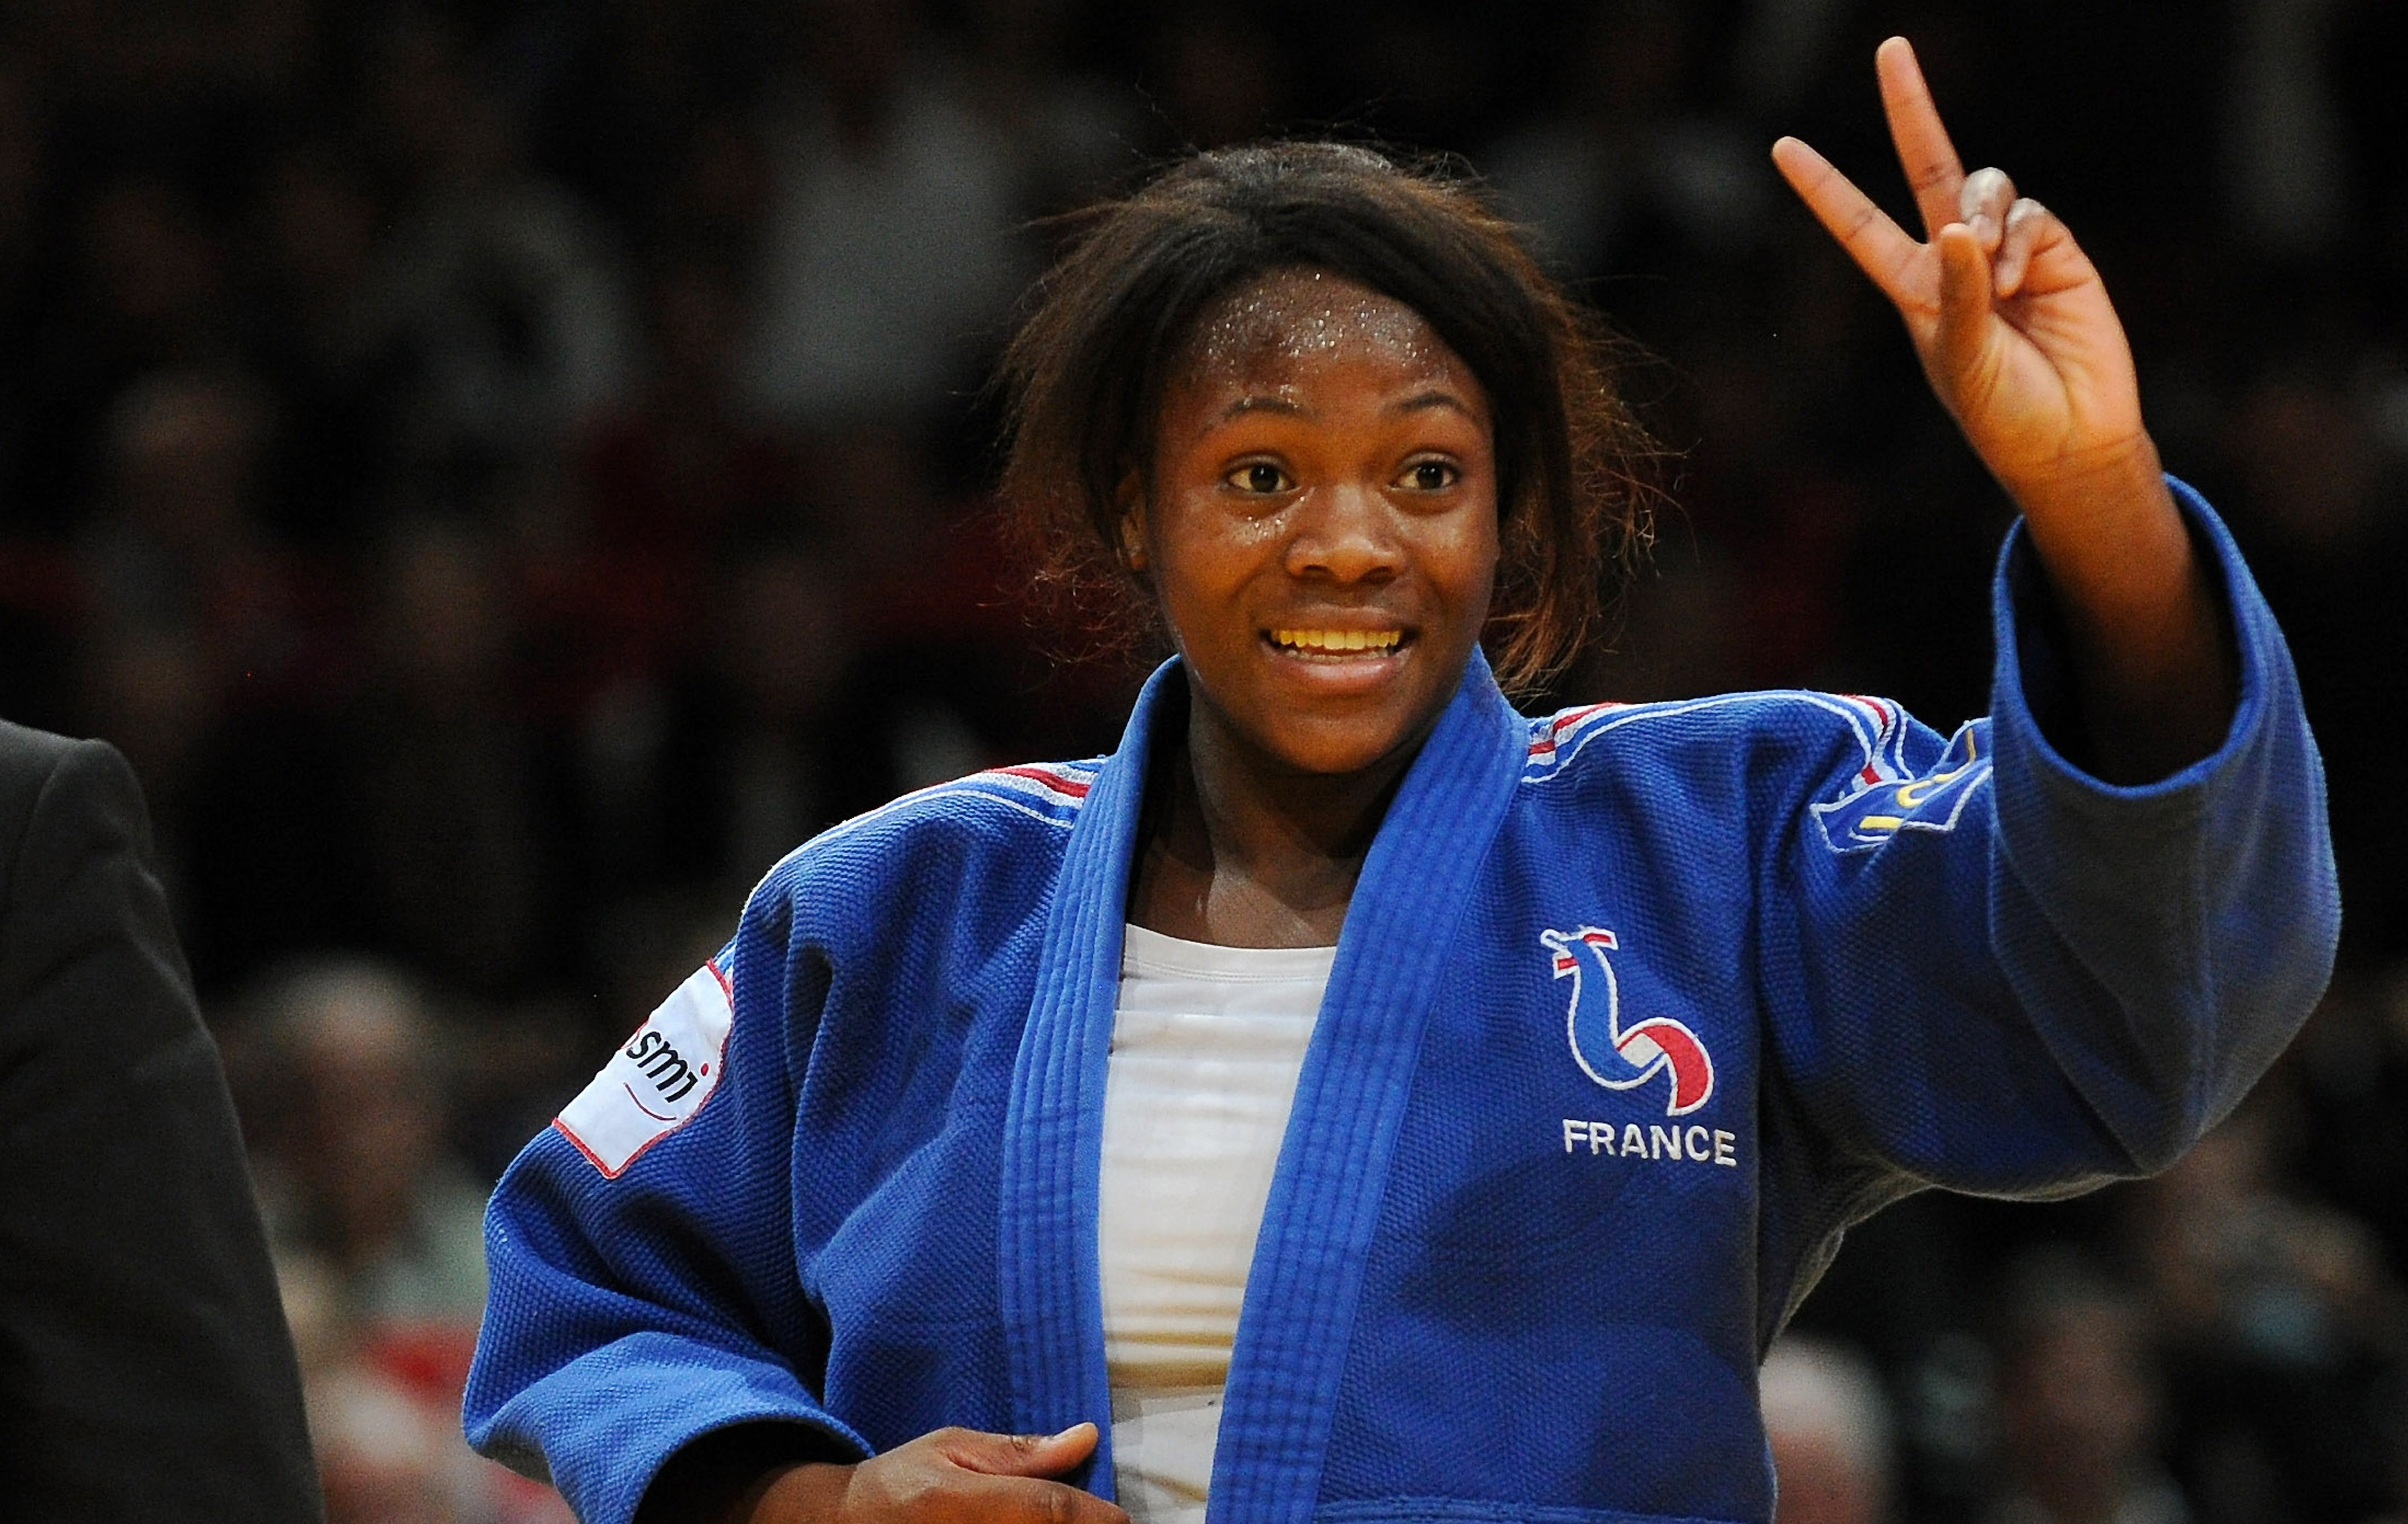 Clarisse agbegnenou is a professional judoka. 